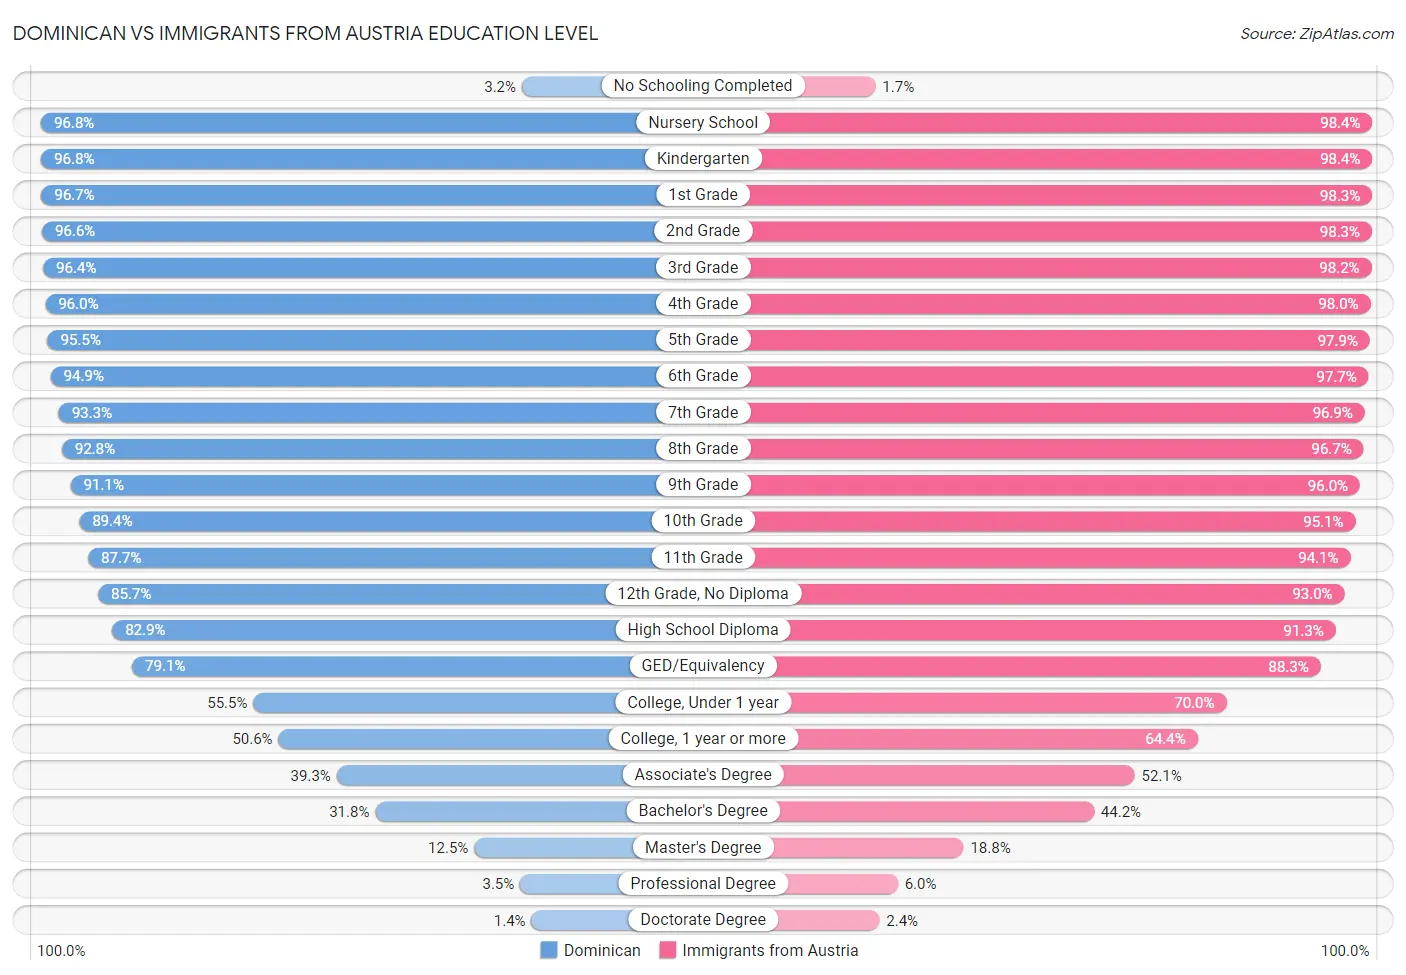 Dominican vs Immigrants from Austria Education Level